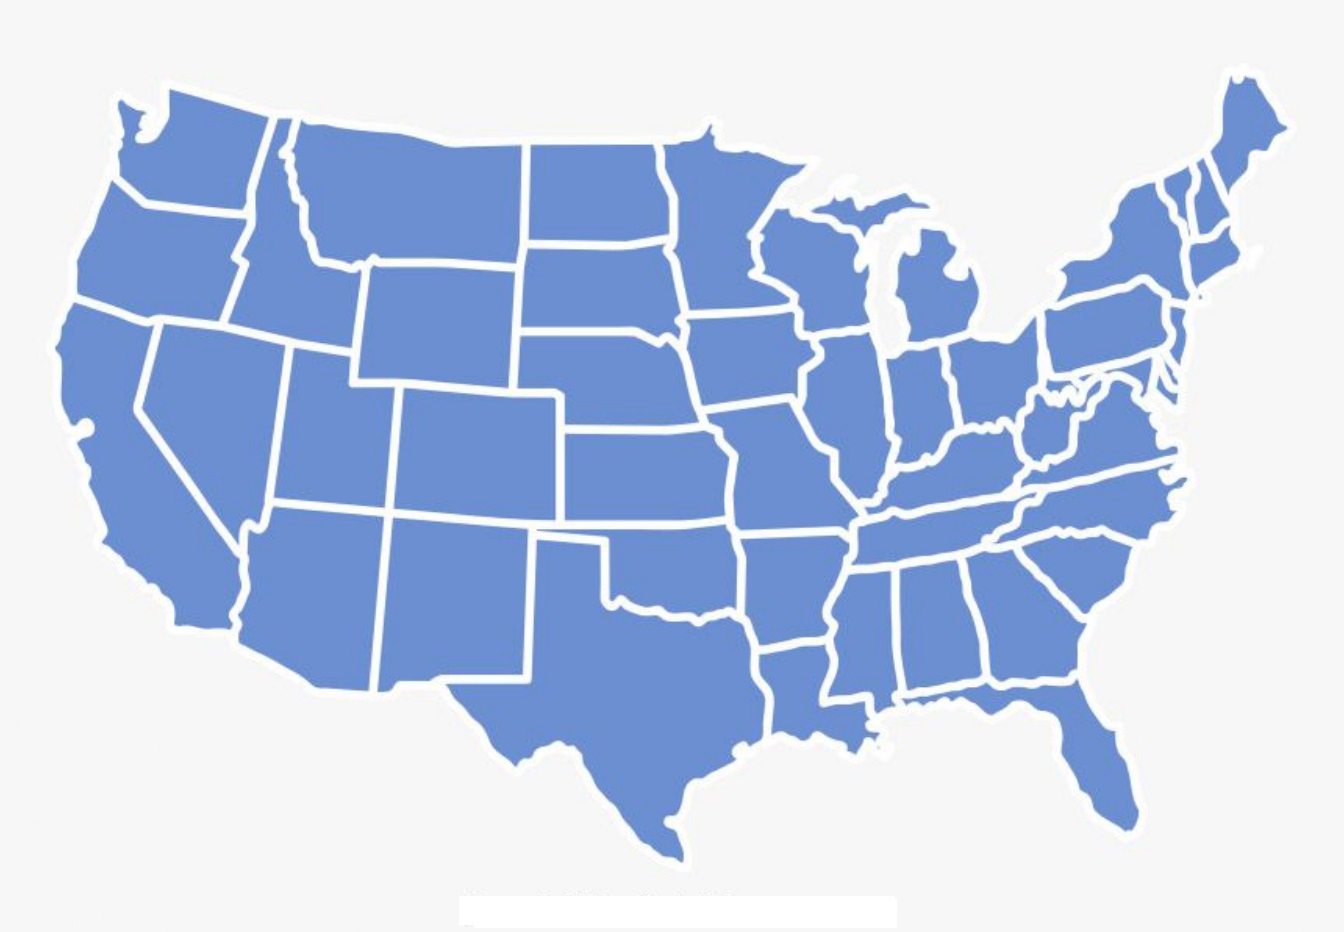 U.S Vector Map With Boundaries